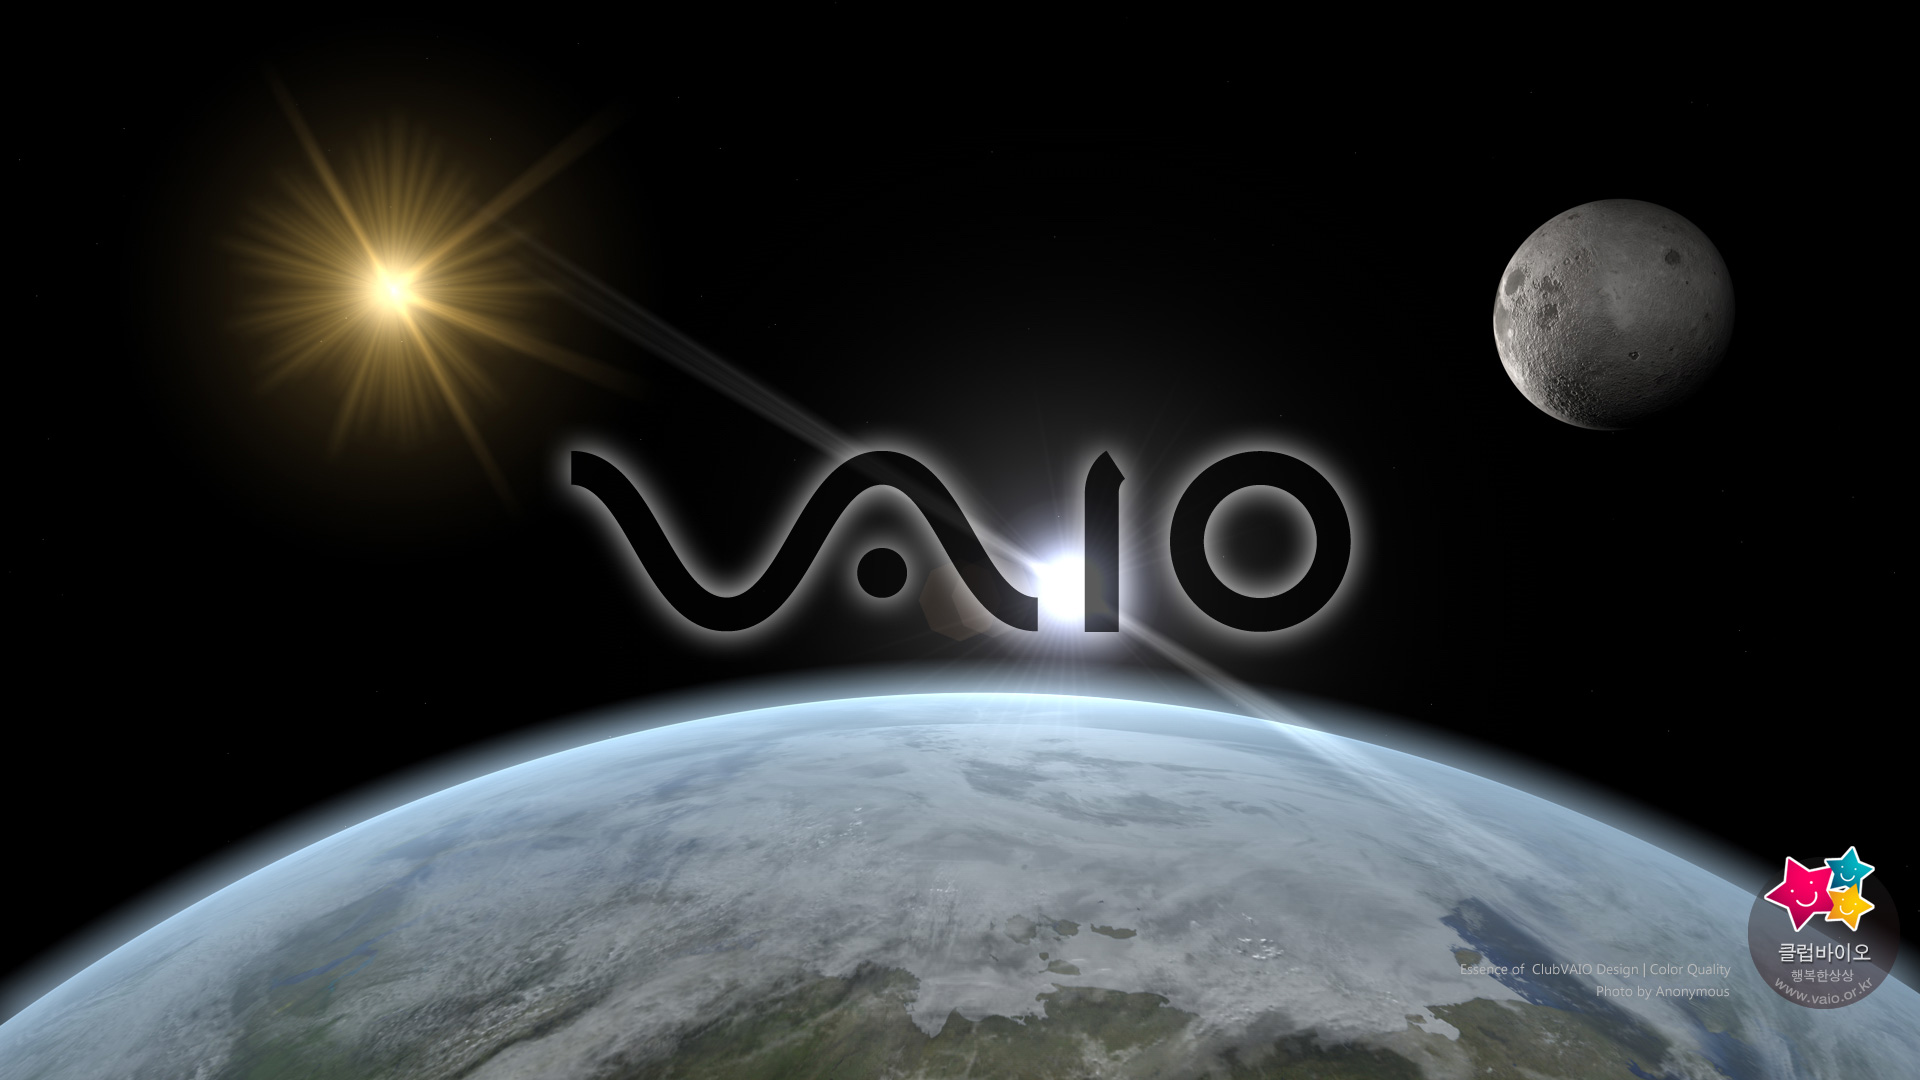 Free Download Earth Vaio Wallpaper 19x1080 19x1080 For Your Desktop Mobile Tablet Explore 50 Vaio Wallpaper 19x1080 Sony Wallpapers 19x1080 Sony Vaio Wallpaper Backgrounds